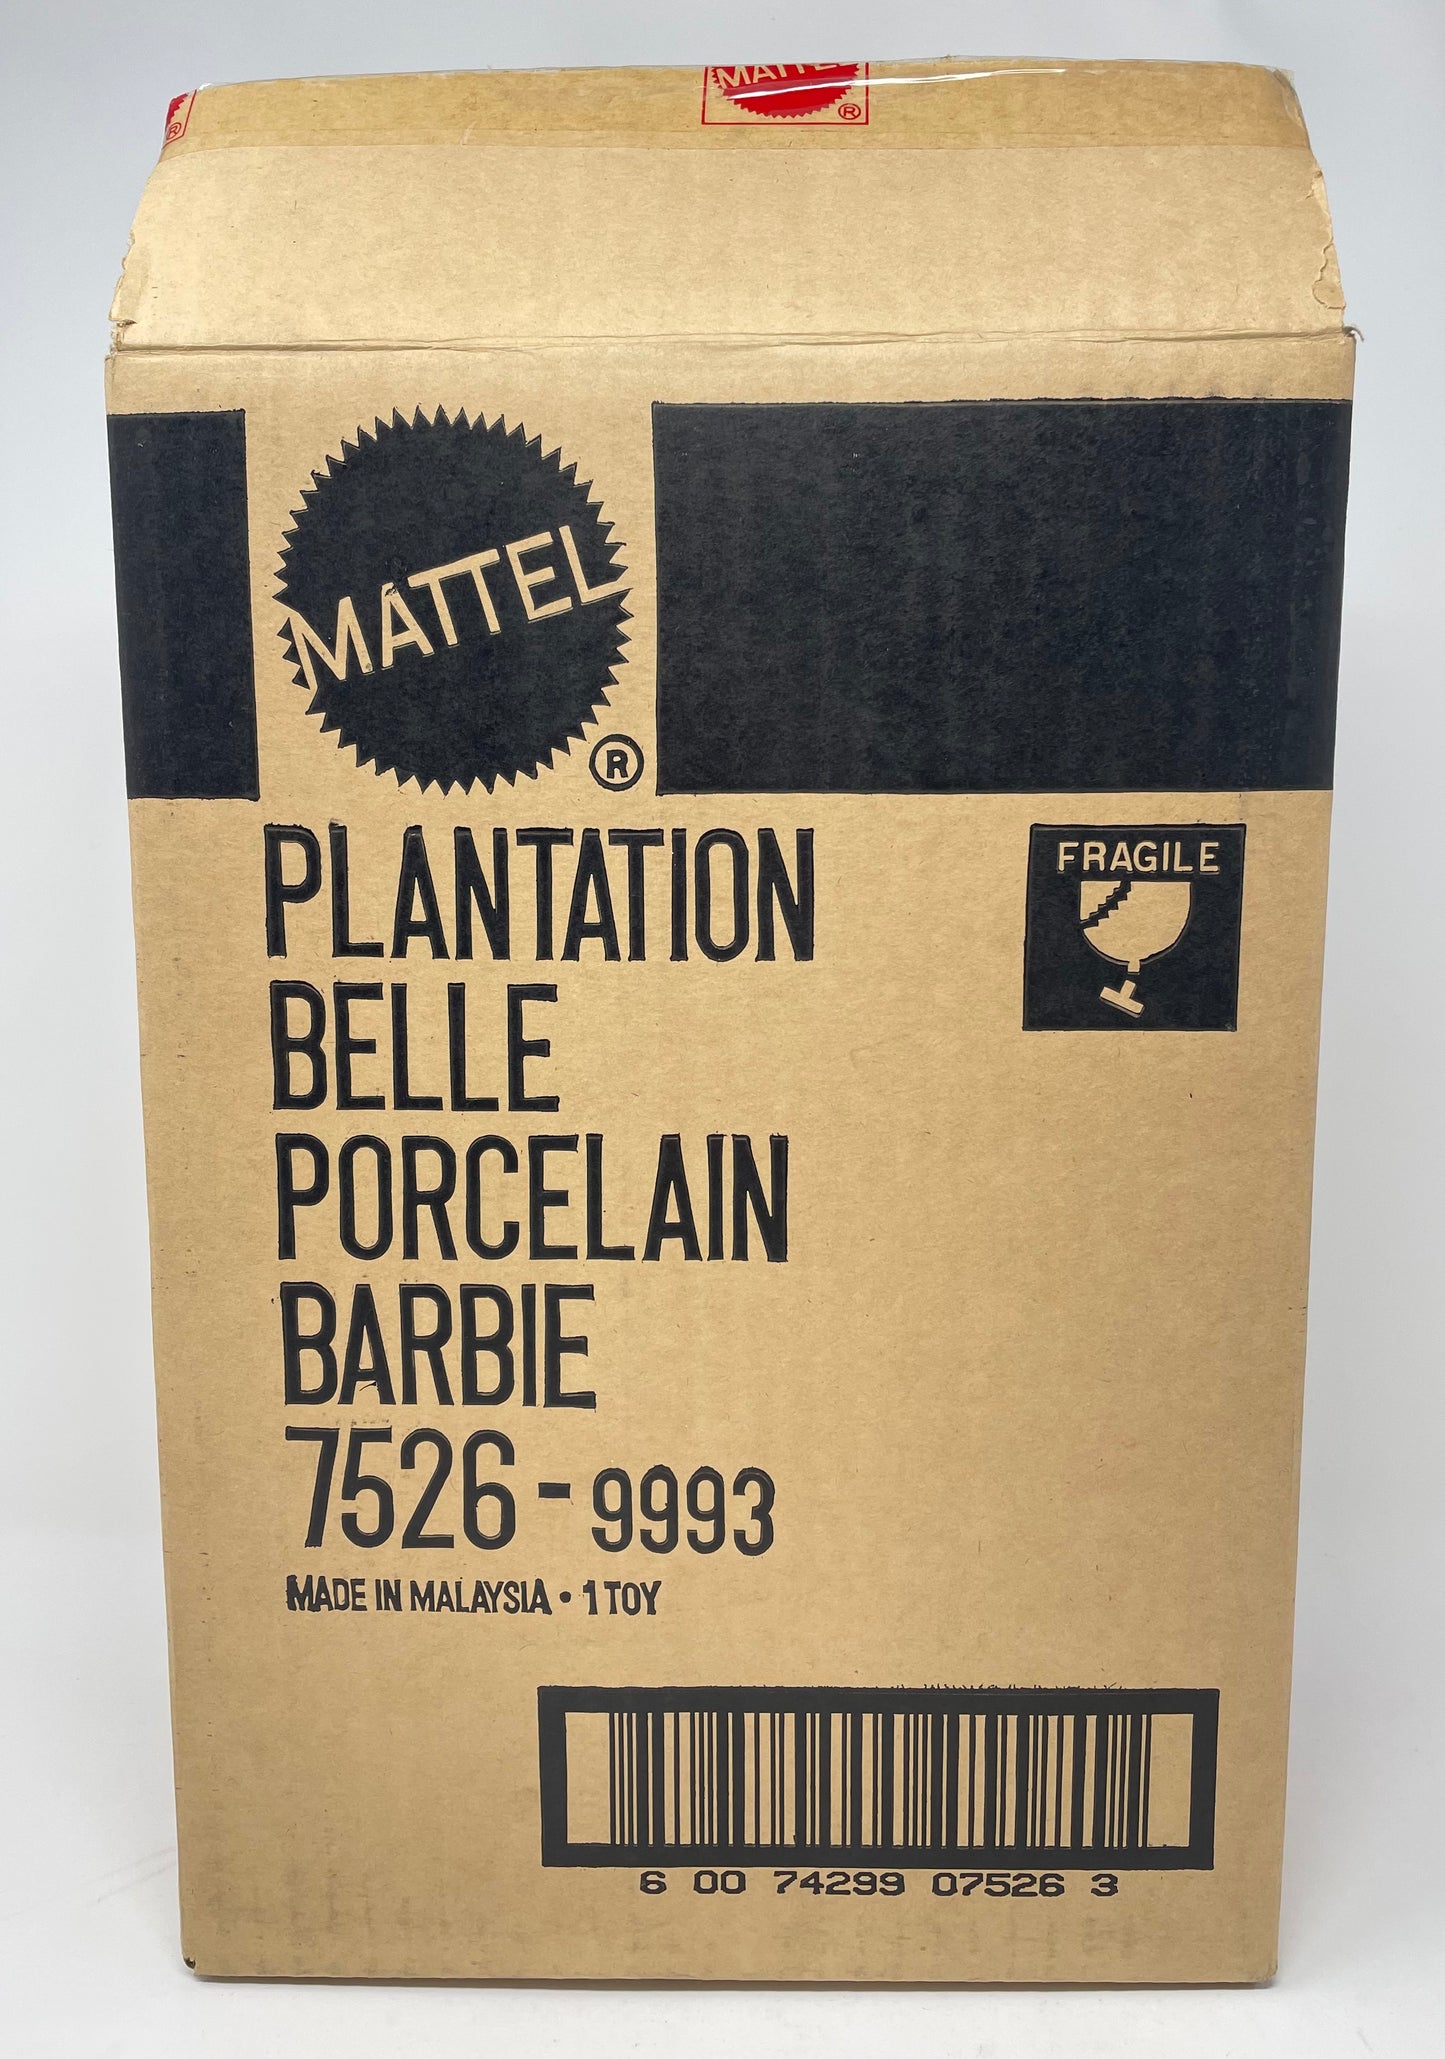 PLANTATION BELLE PORCELAIN BARBIE - #7526 - MATTEL 1991